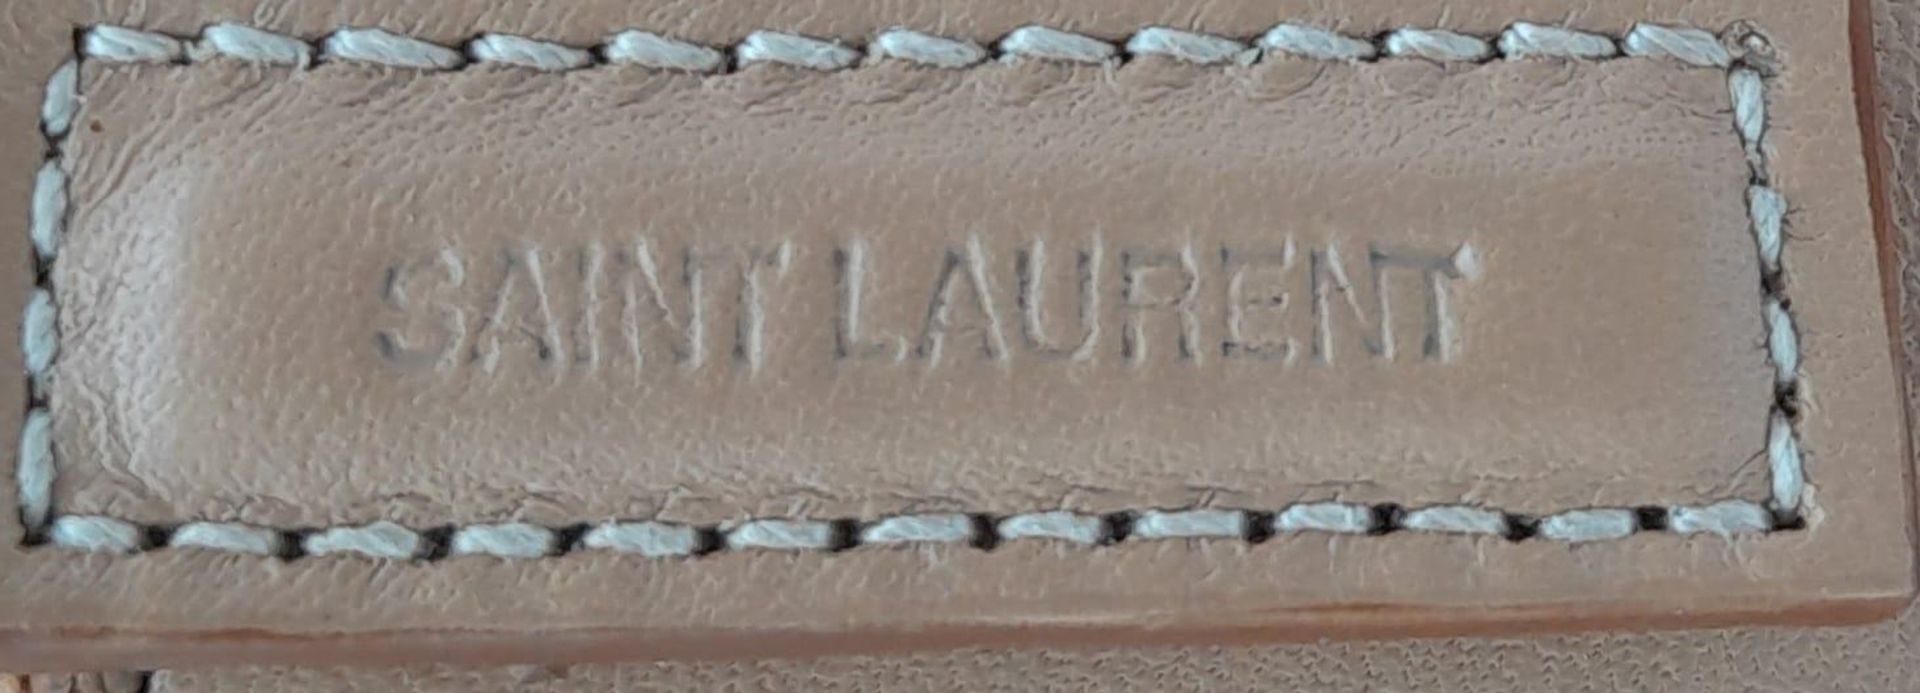 A Saint Laurent Beige Tote Bag. Woven rattan and leather trim exterior. Magnetic closure, gold-toned - Bild 12 aus 12